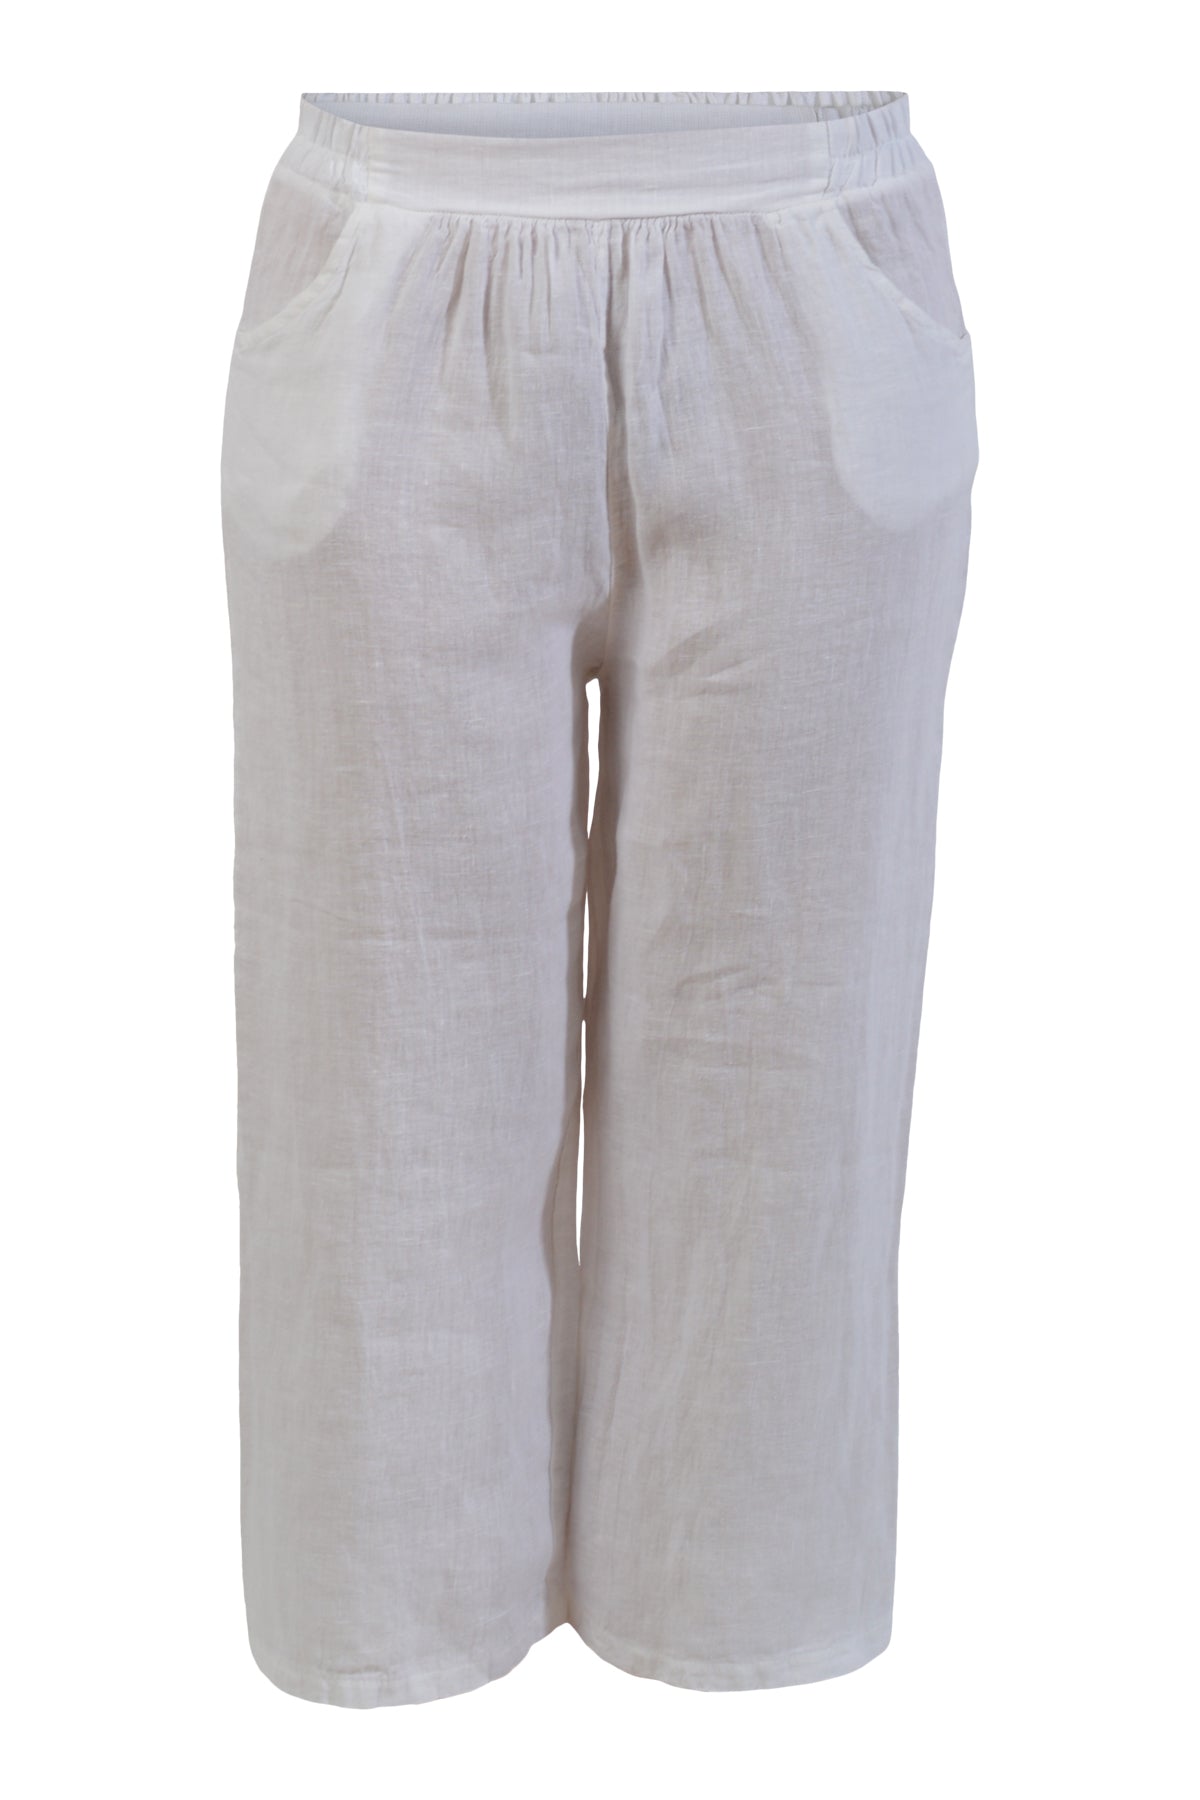 Piro Culotte bukser i hør PI0573, hvid